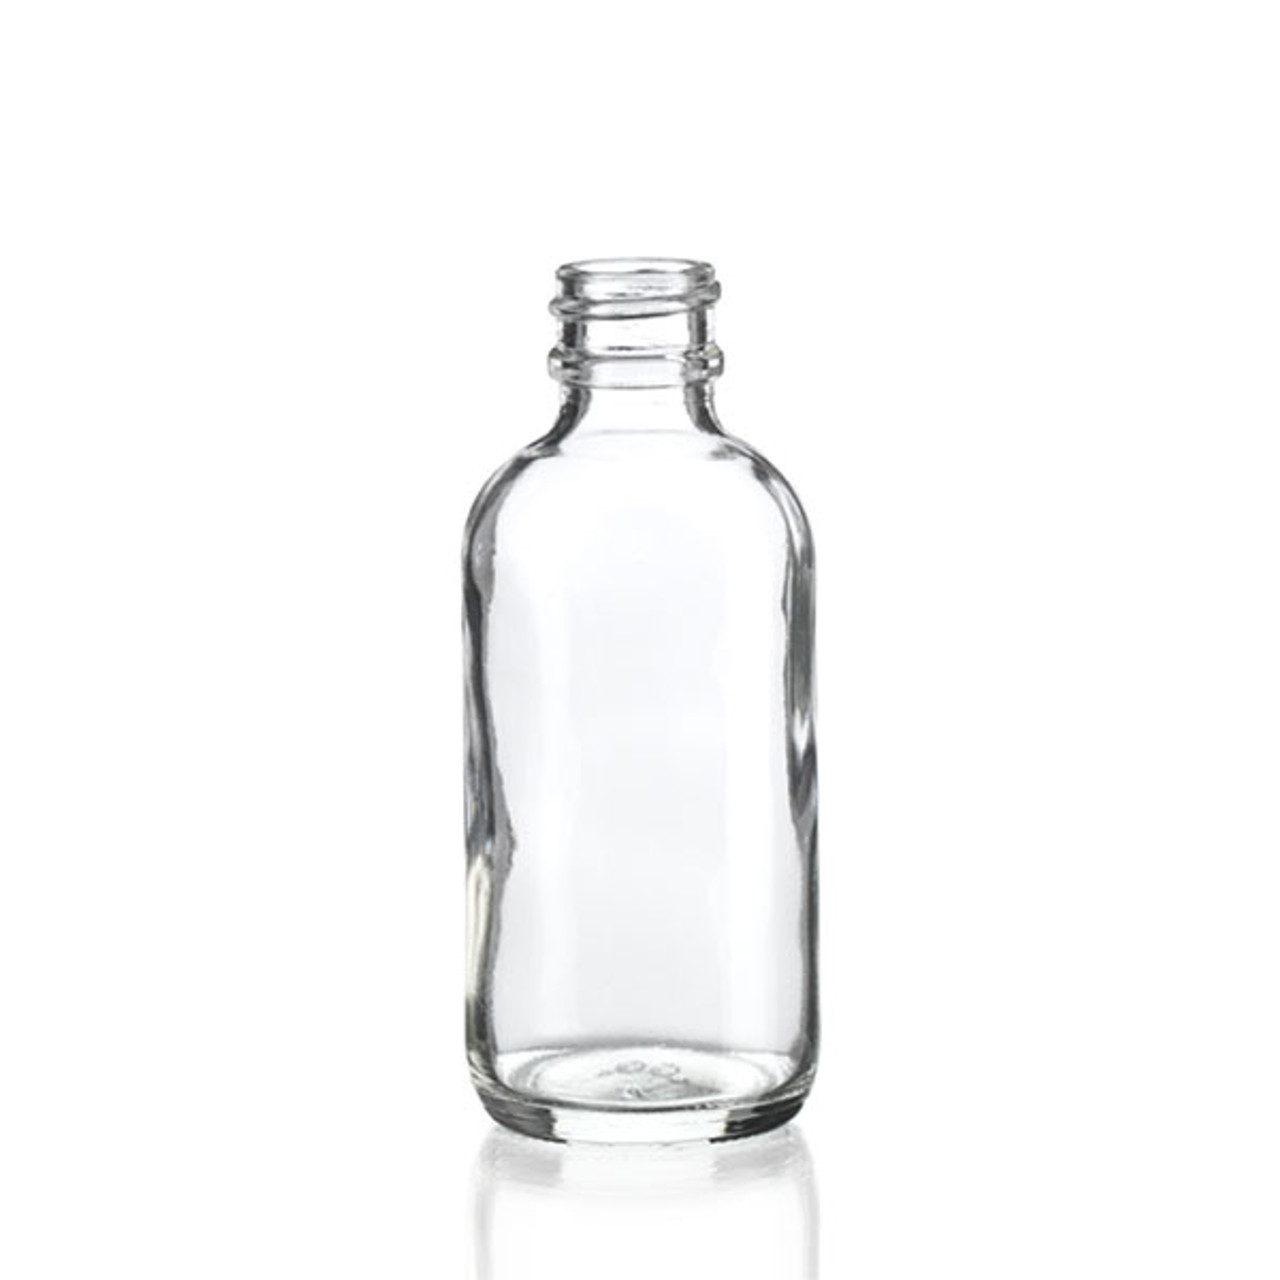 2 oz Clear Glass Boston Round Bottle 20-400 Neck Finish